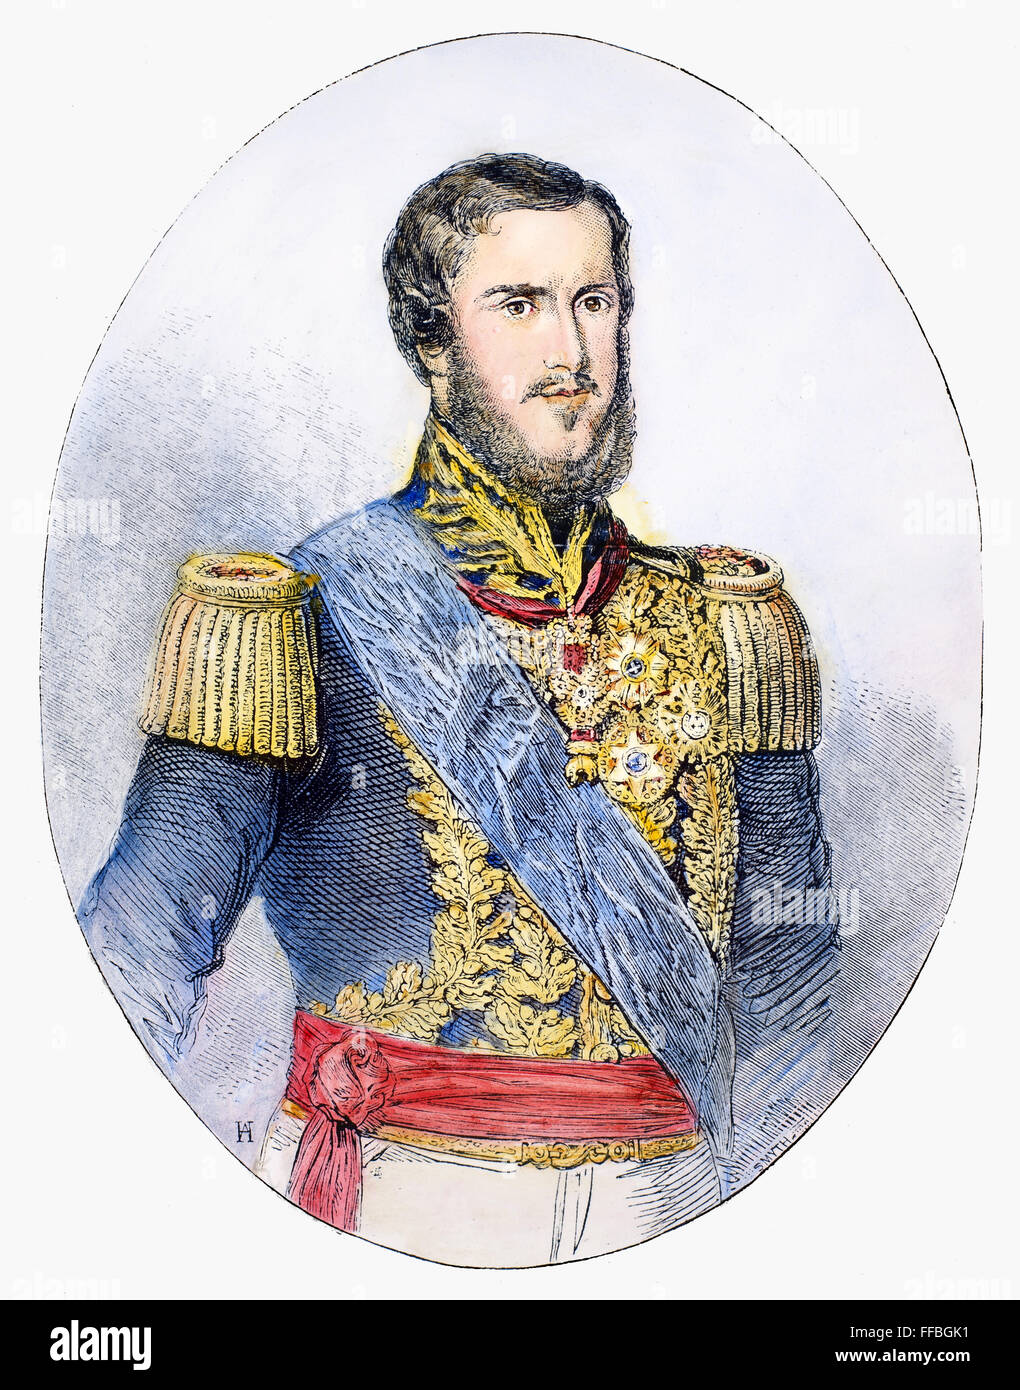 DOM PEDRO II (1825-1891). /nEmperor of Brazil, 1831-1889. Wood engraving, 1852. Stock Photo